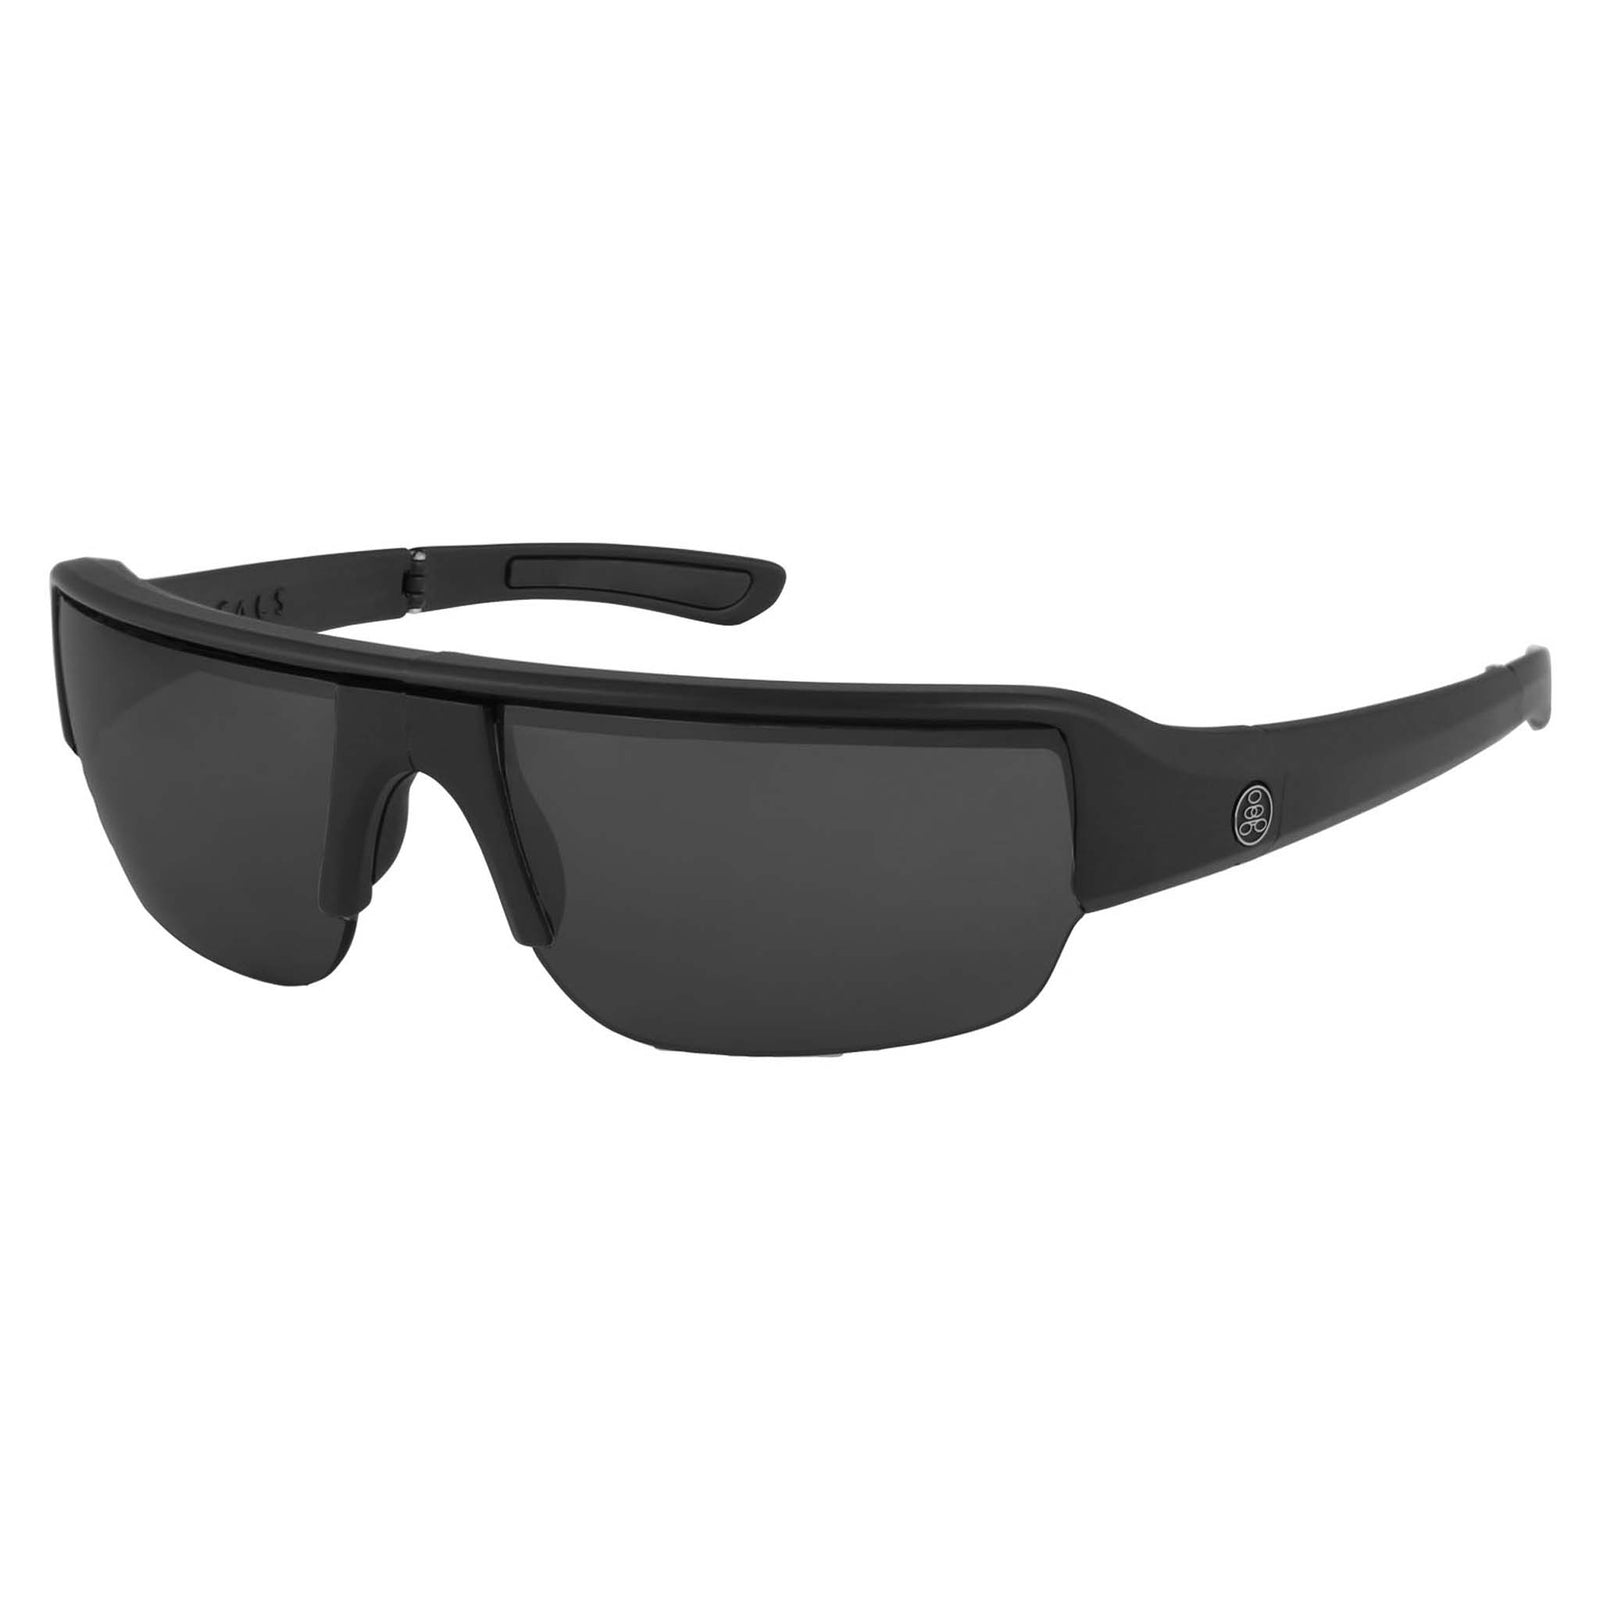 Popticals, Premium Compact Sunglasses, PopGun, 010010-BMGP, Polarized Sunglasses, Matte Black Frame, Gray Lenses, Glam View